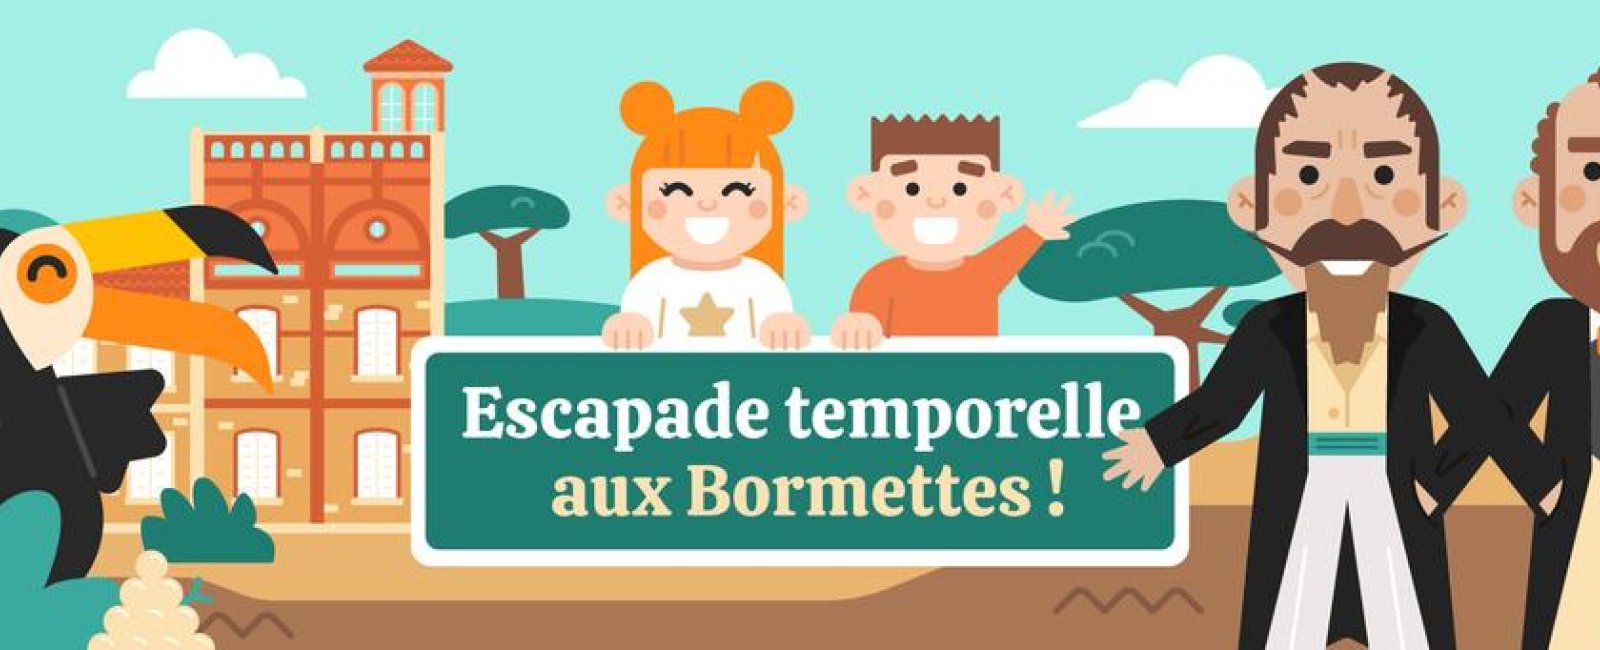 Baludik "Escapade temporelle aux Bormettes !"